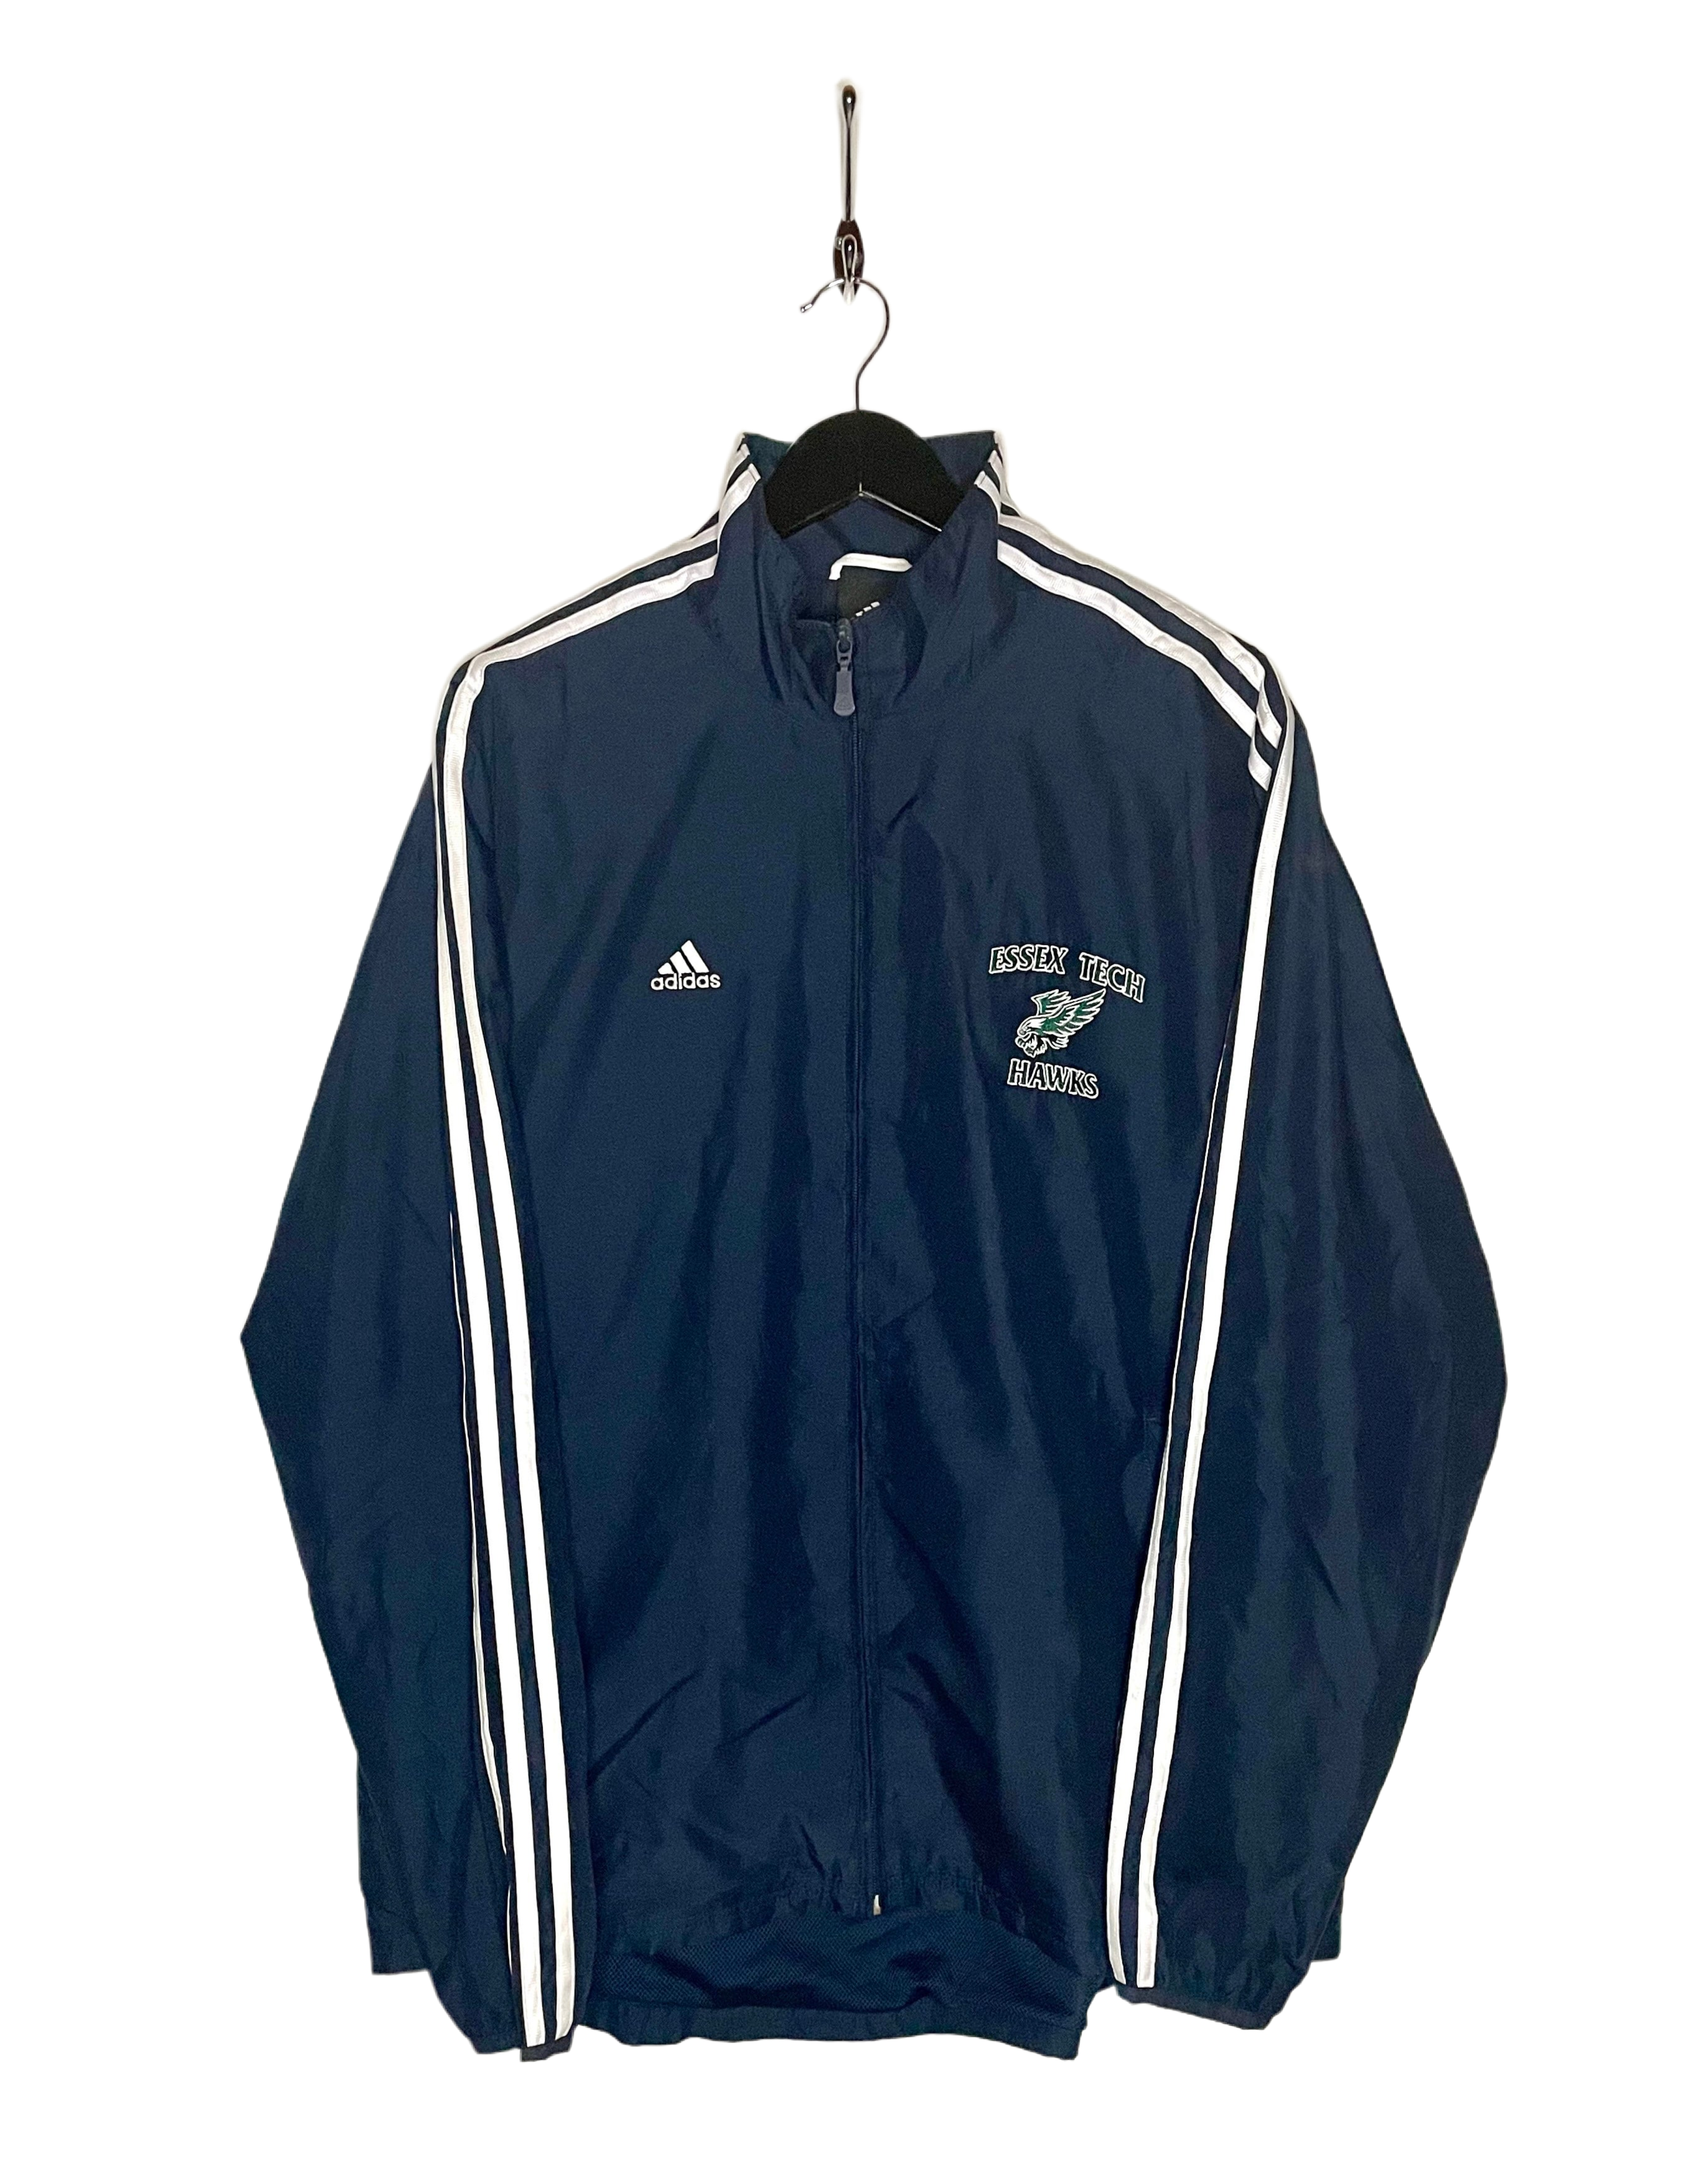 Adidas Essex Tech Hawks Training Jacket Blue Size L